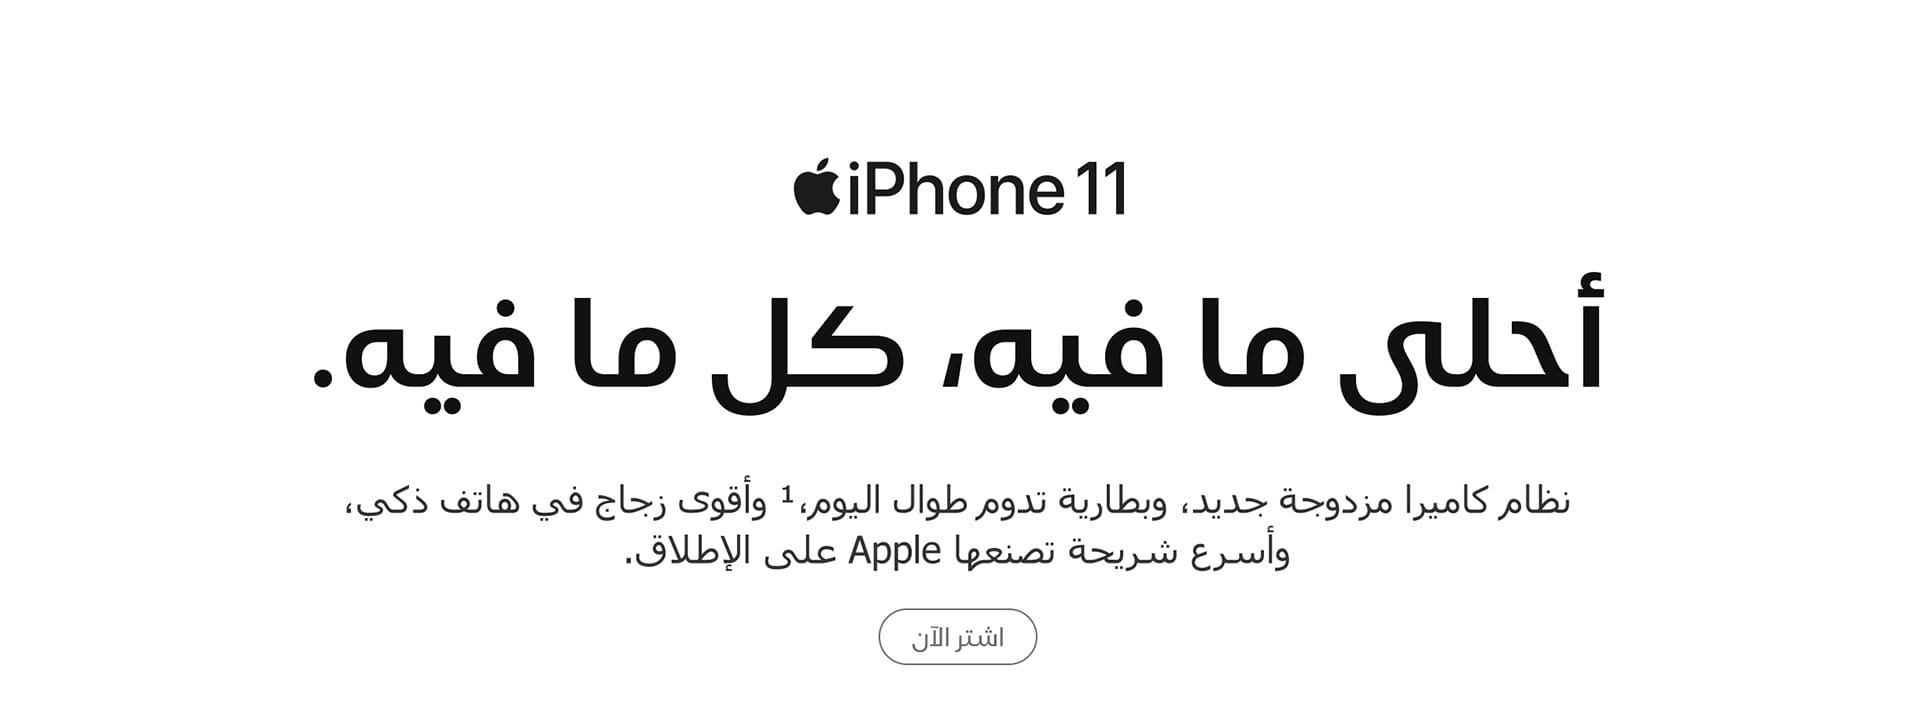 apple-iphone11-price-uae-etisalat-overview-ar-1